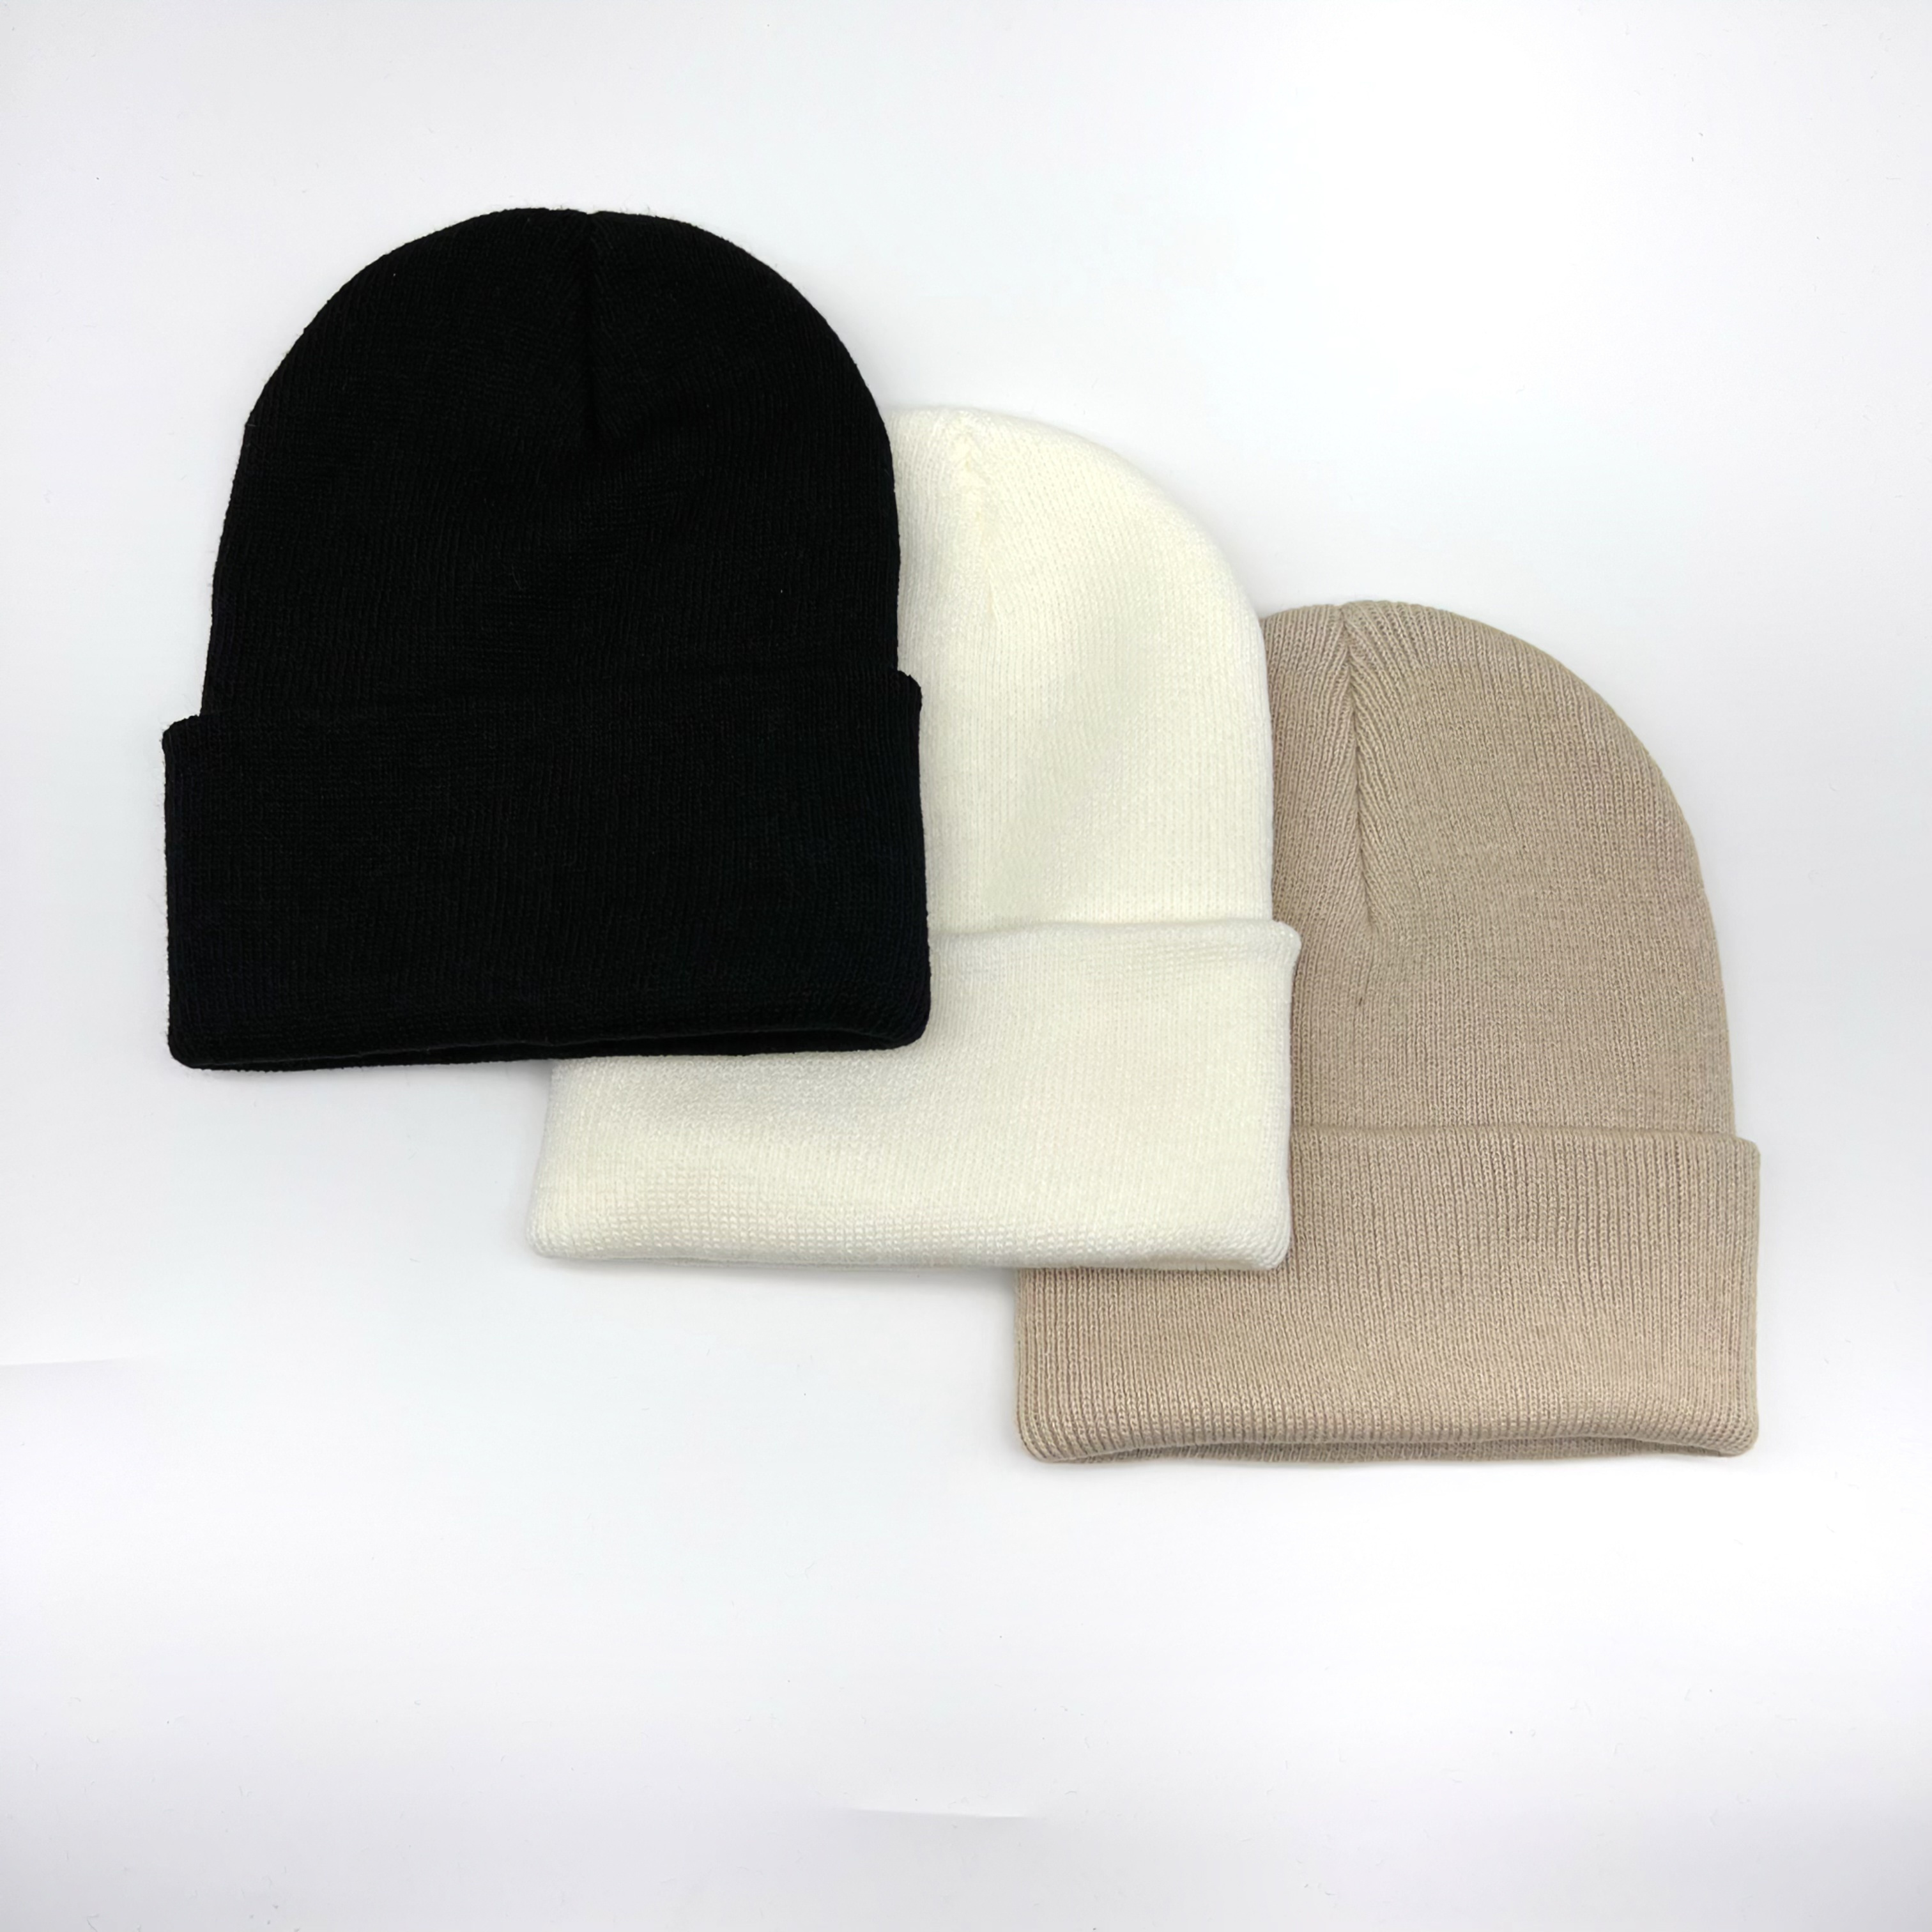 New Unisex Winter Knit Hats Men Women Beanie Hat Cap Warm with